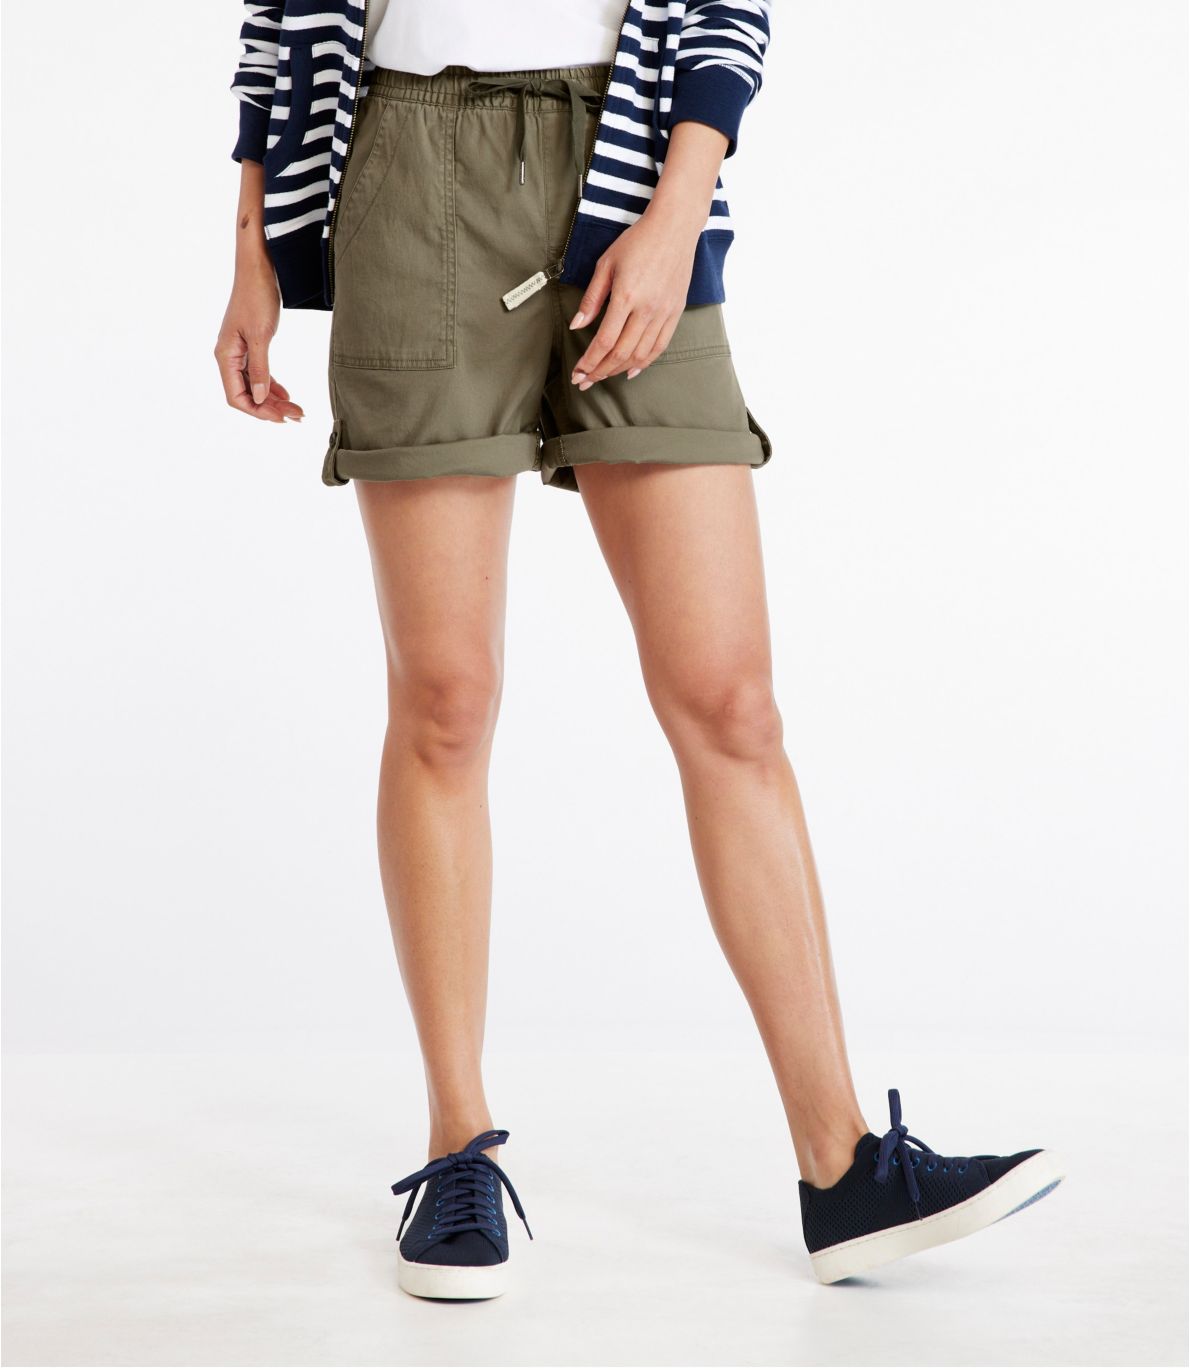 Women's Comfort Cotton/TENCEL Shorts, High-Rise